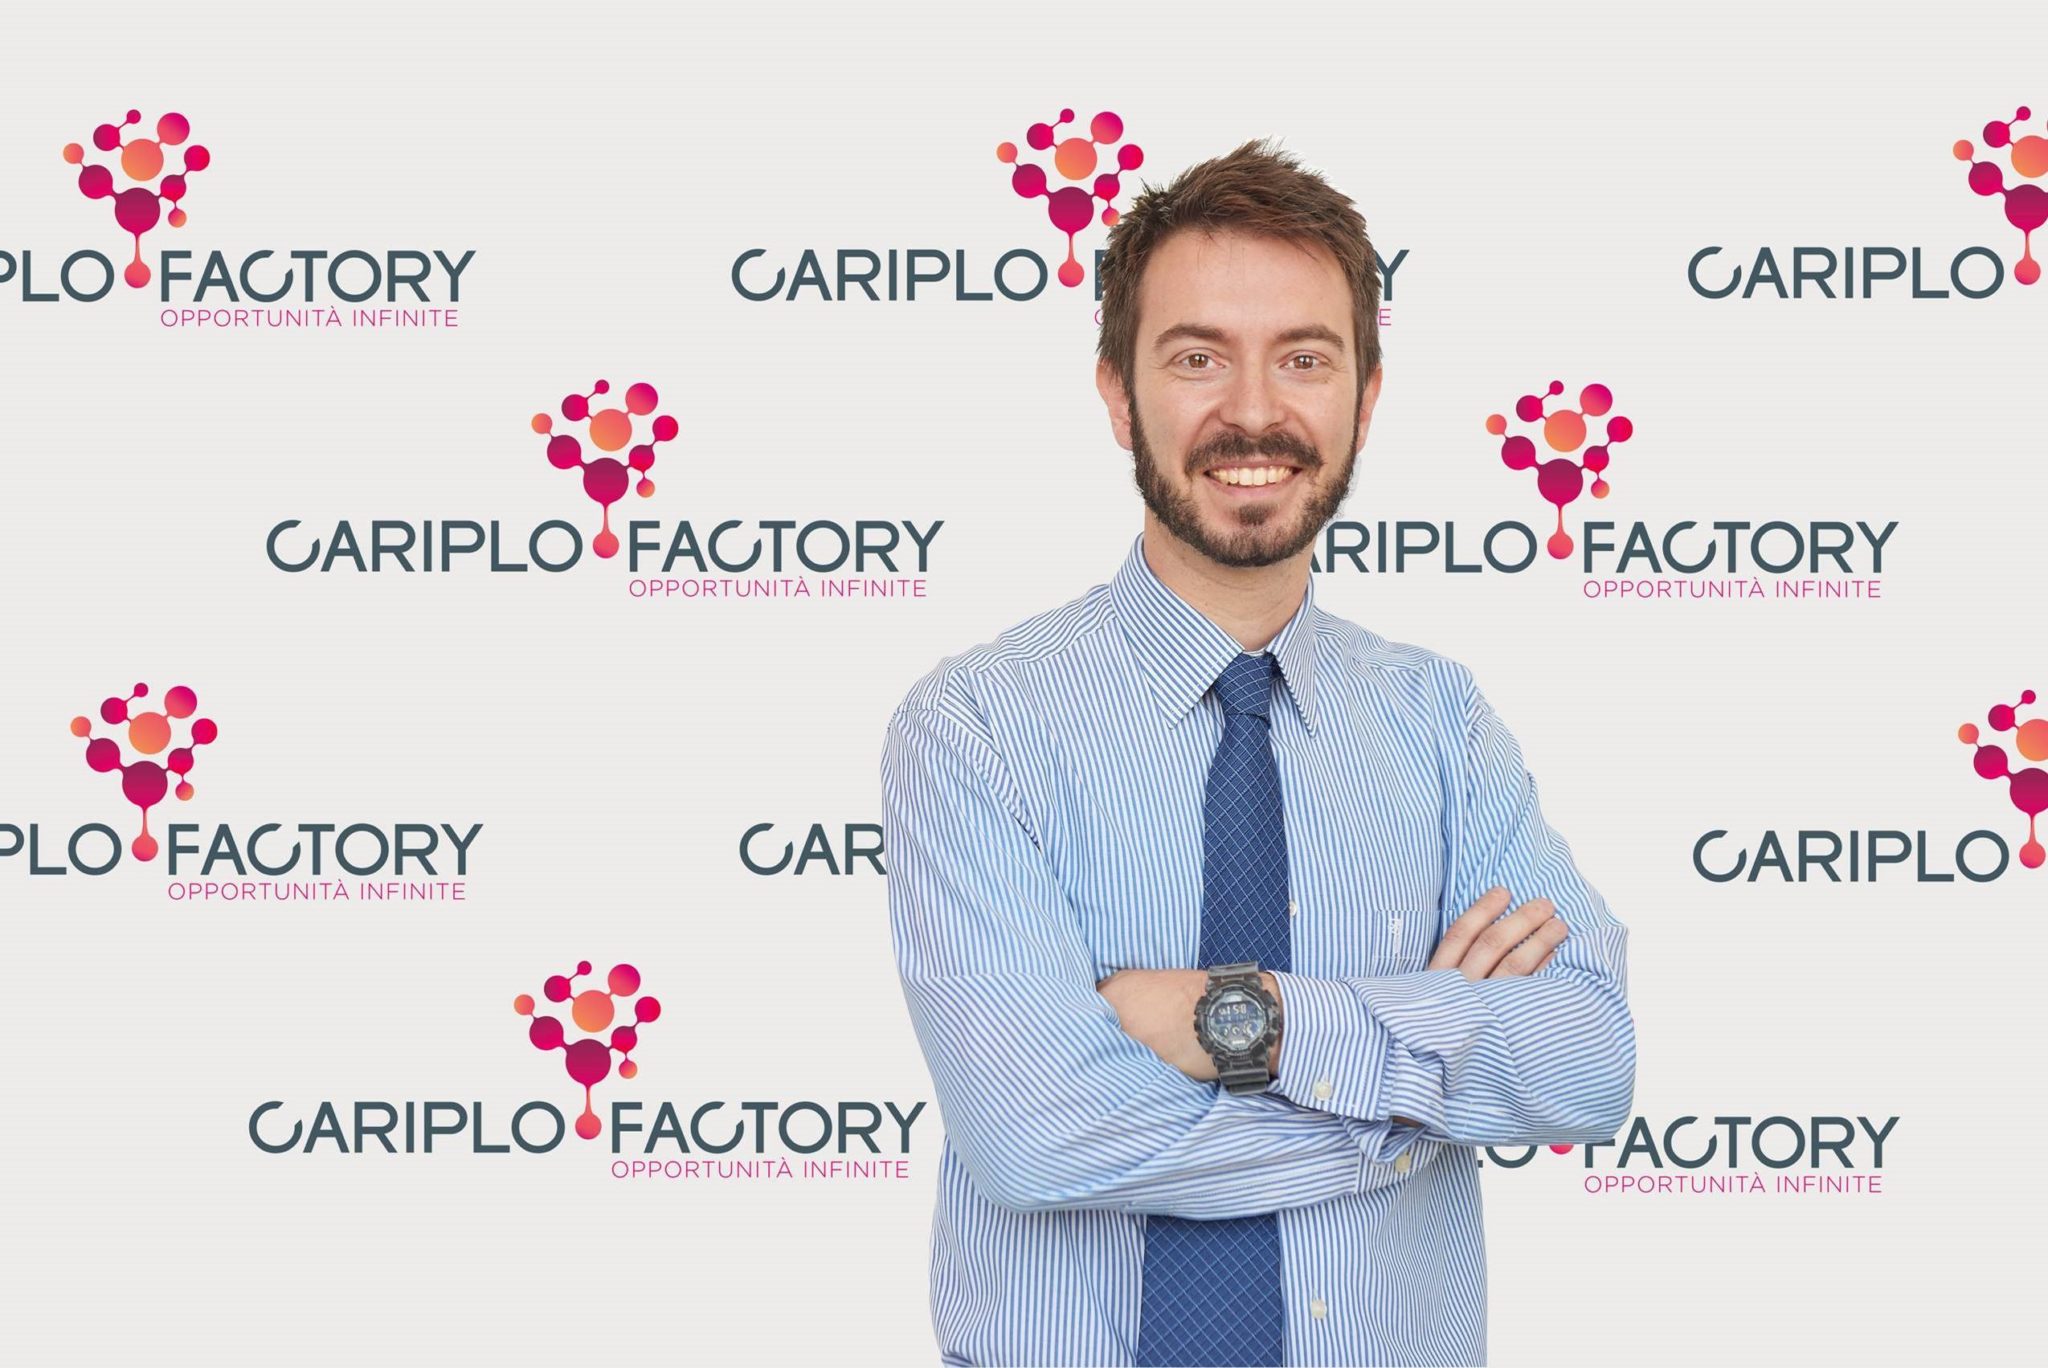 Riccardo Porro Cariplo Factory open innovation